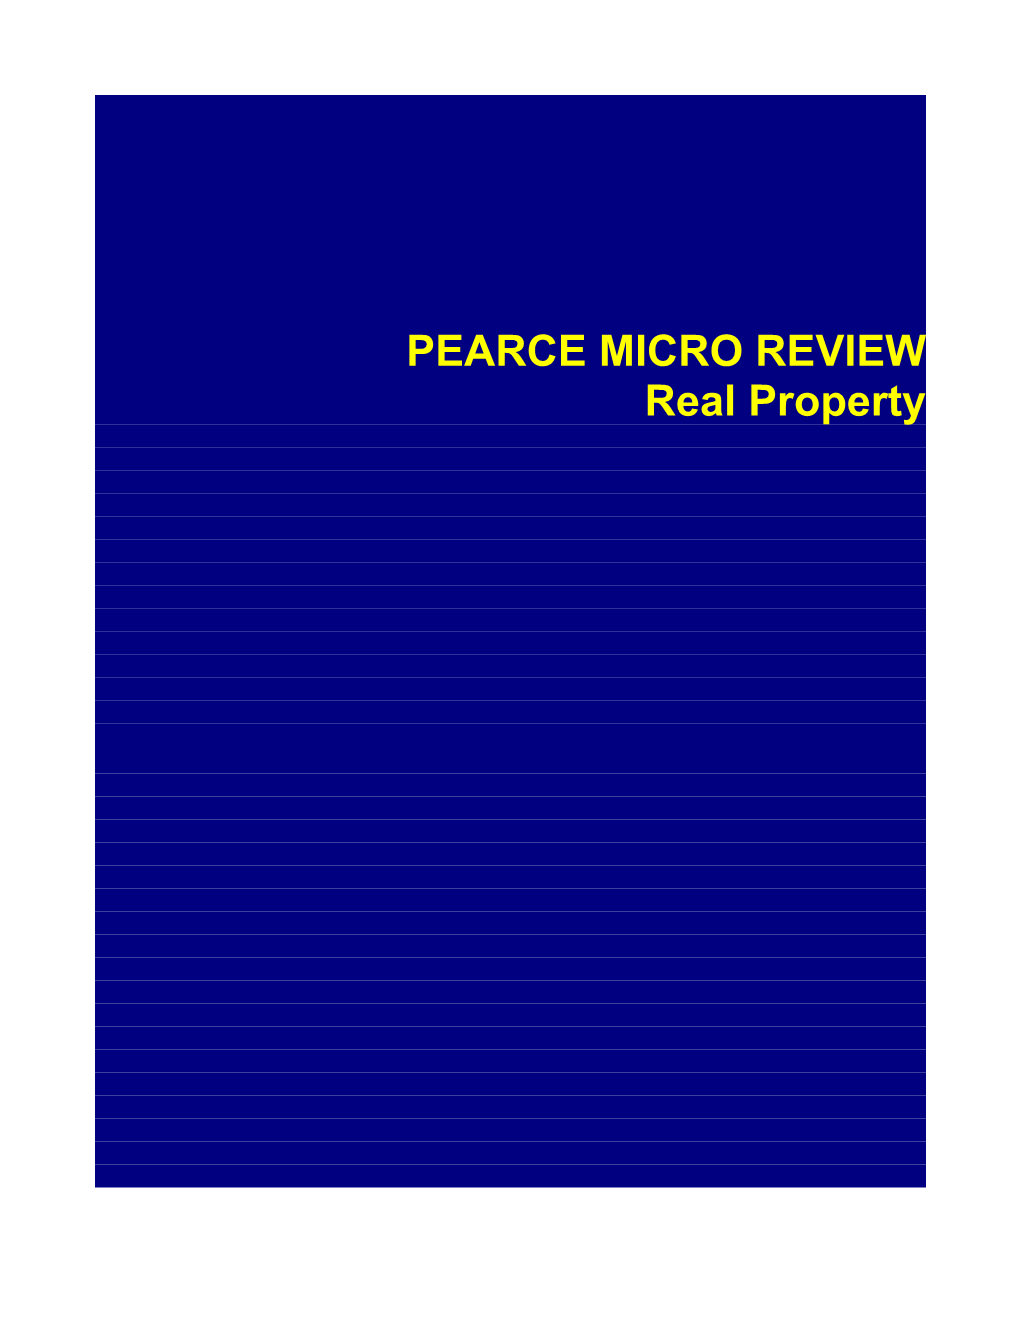 PEARCE MICRO REVIEW Real Property PEARCE MICRO REVIEW – REAL PROPERTY – Page 1